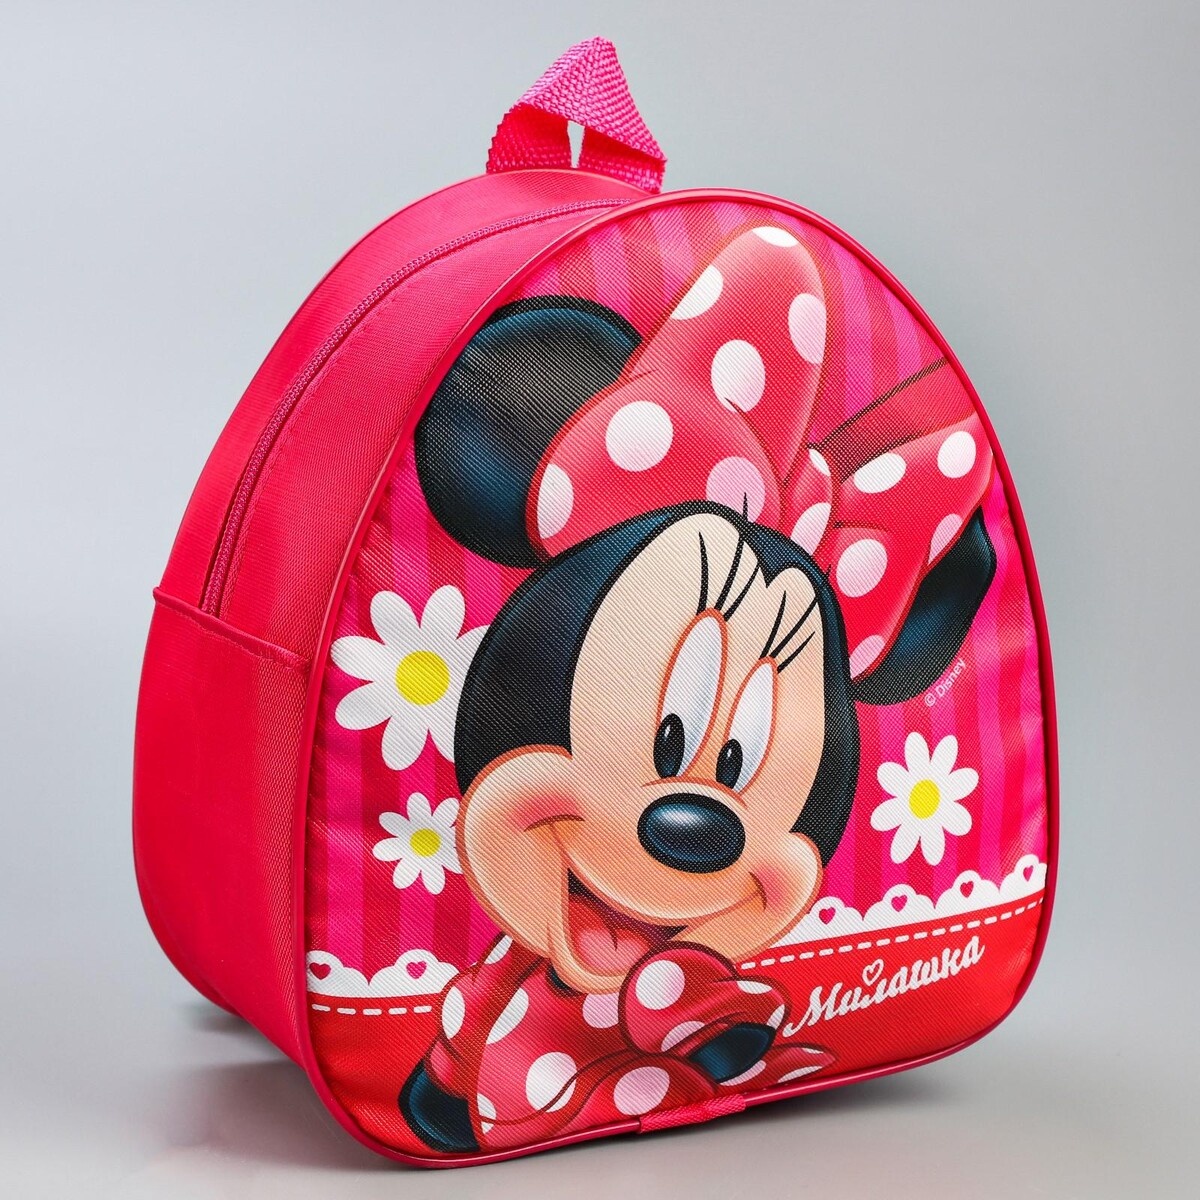 Рюкзак детский, 23х21х10 см, минни маус Disney